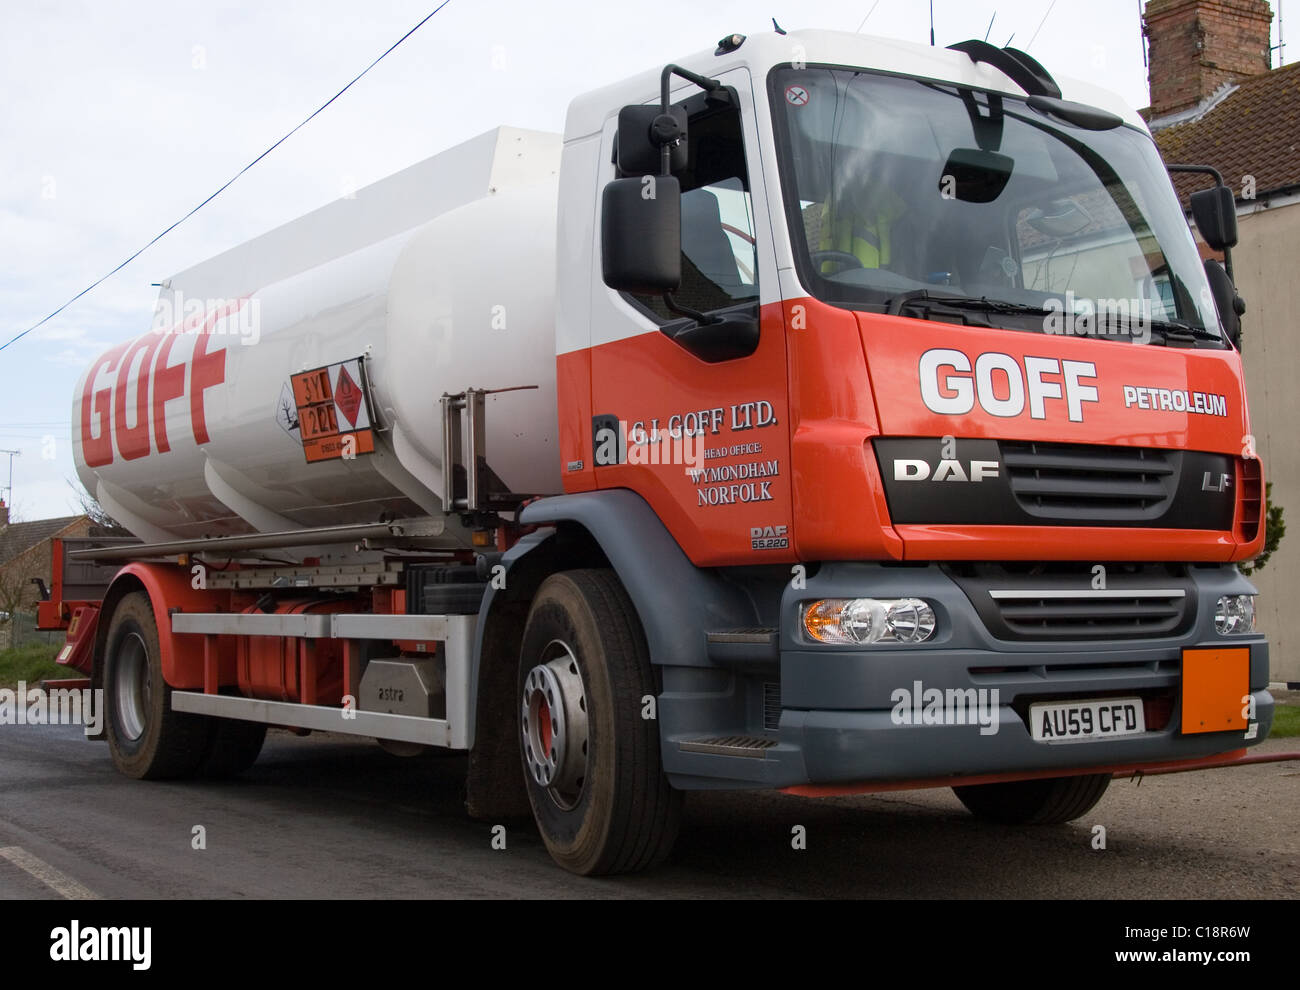 Oil/Fuel tanker truck making a delivery of heating oil (Kerosene) Stock Photo